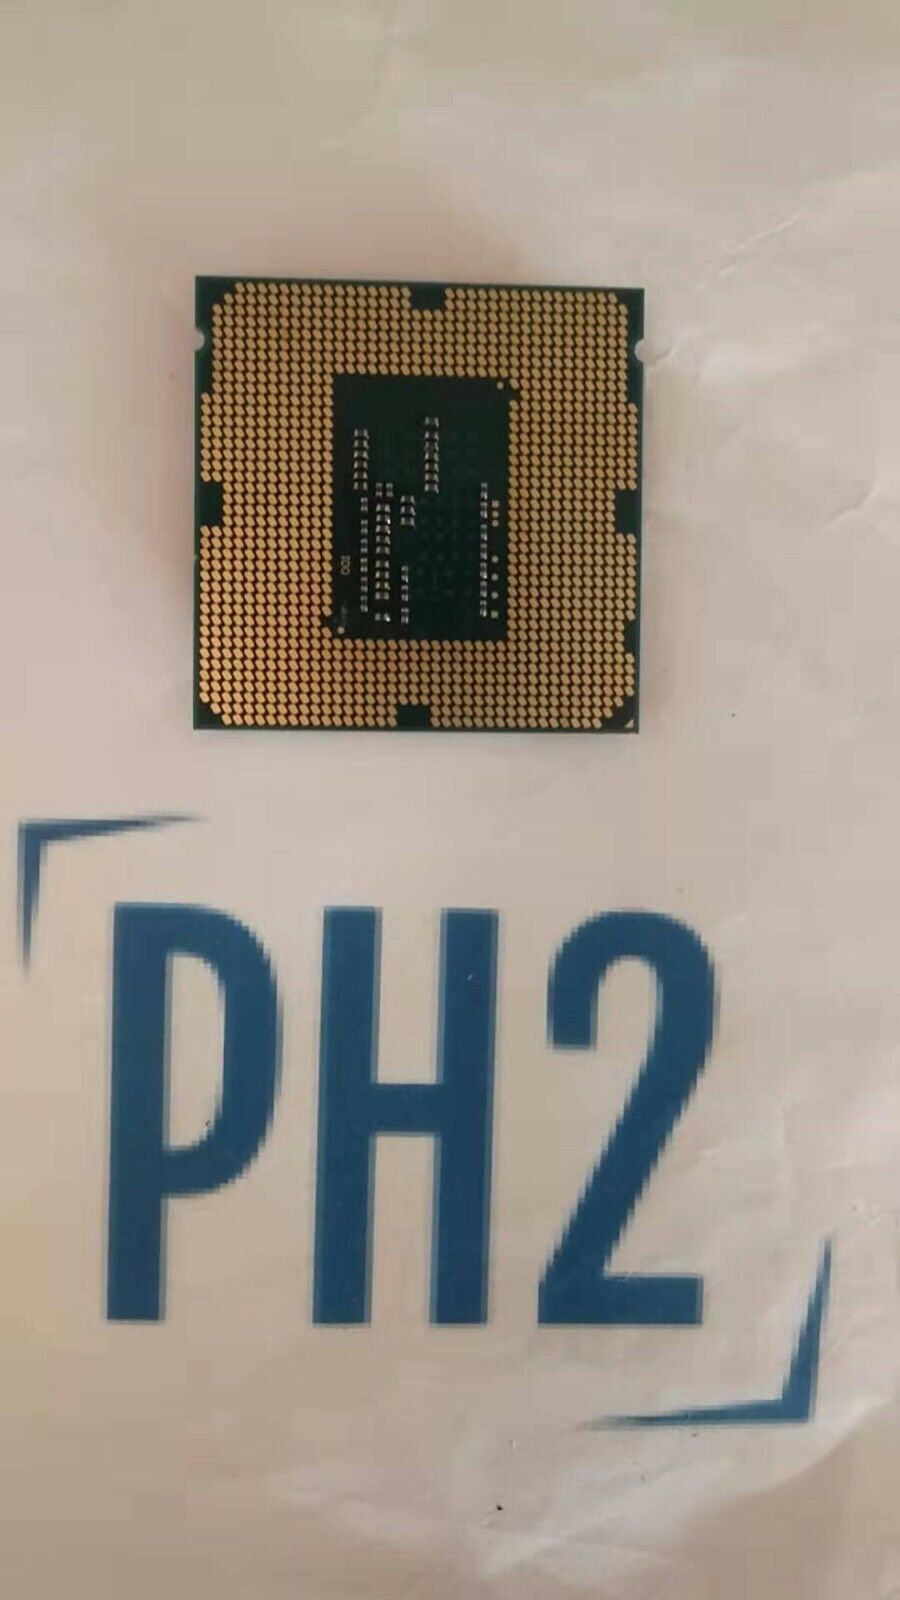 Intel Pentium G3260 3.30GHz VSIETNAM Dual-Core SR1K8 CPU Processor